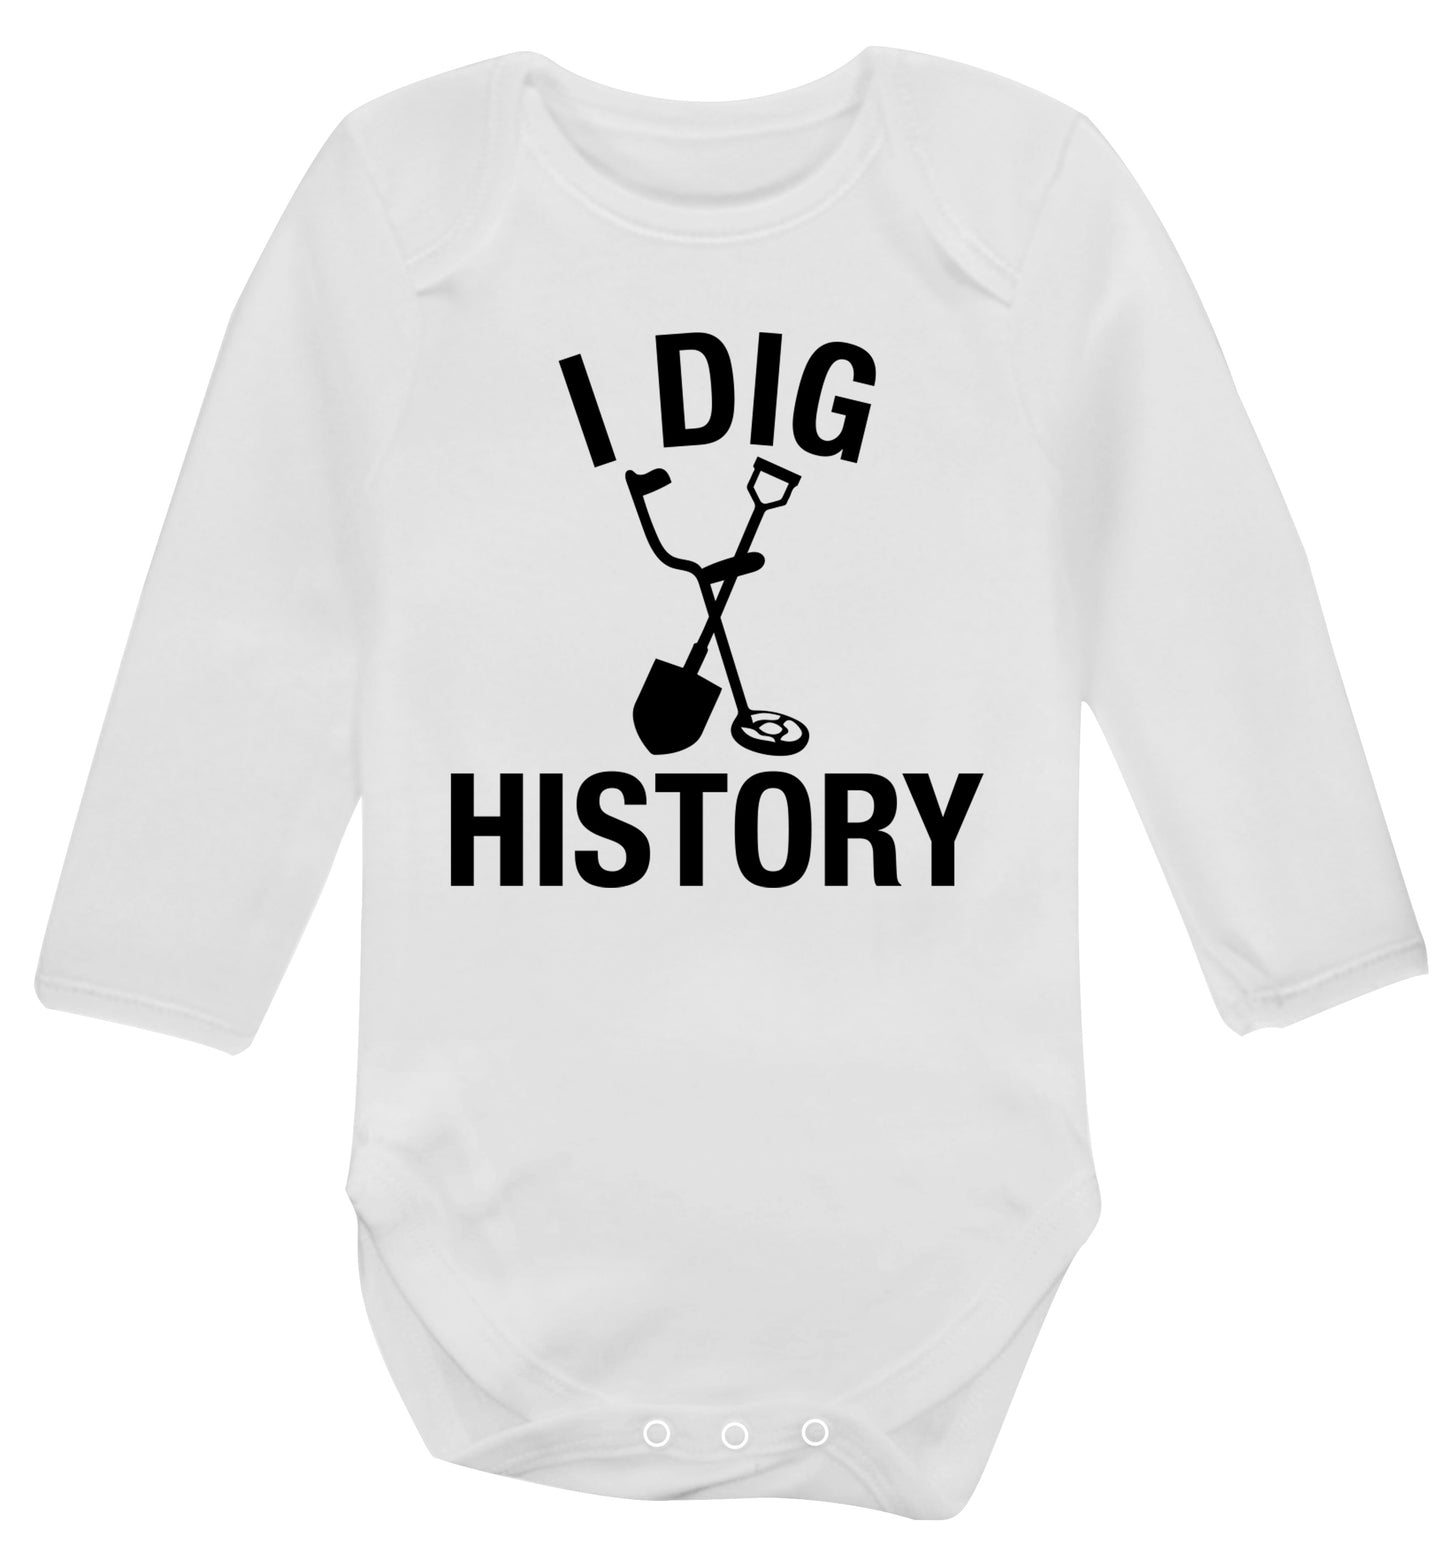 I dig history Baby Vest long sleeved white 6-12 months